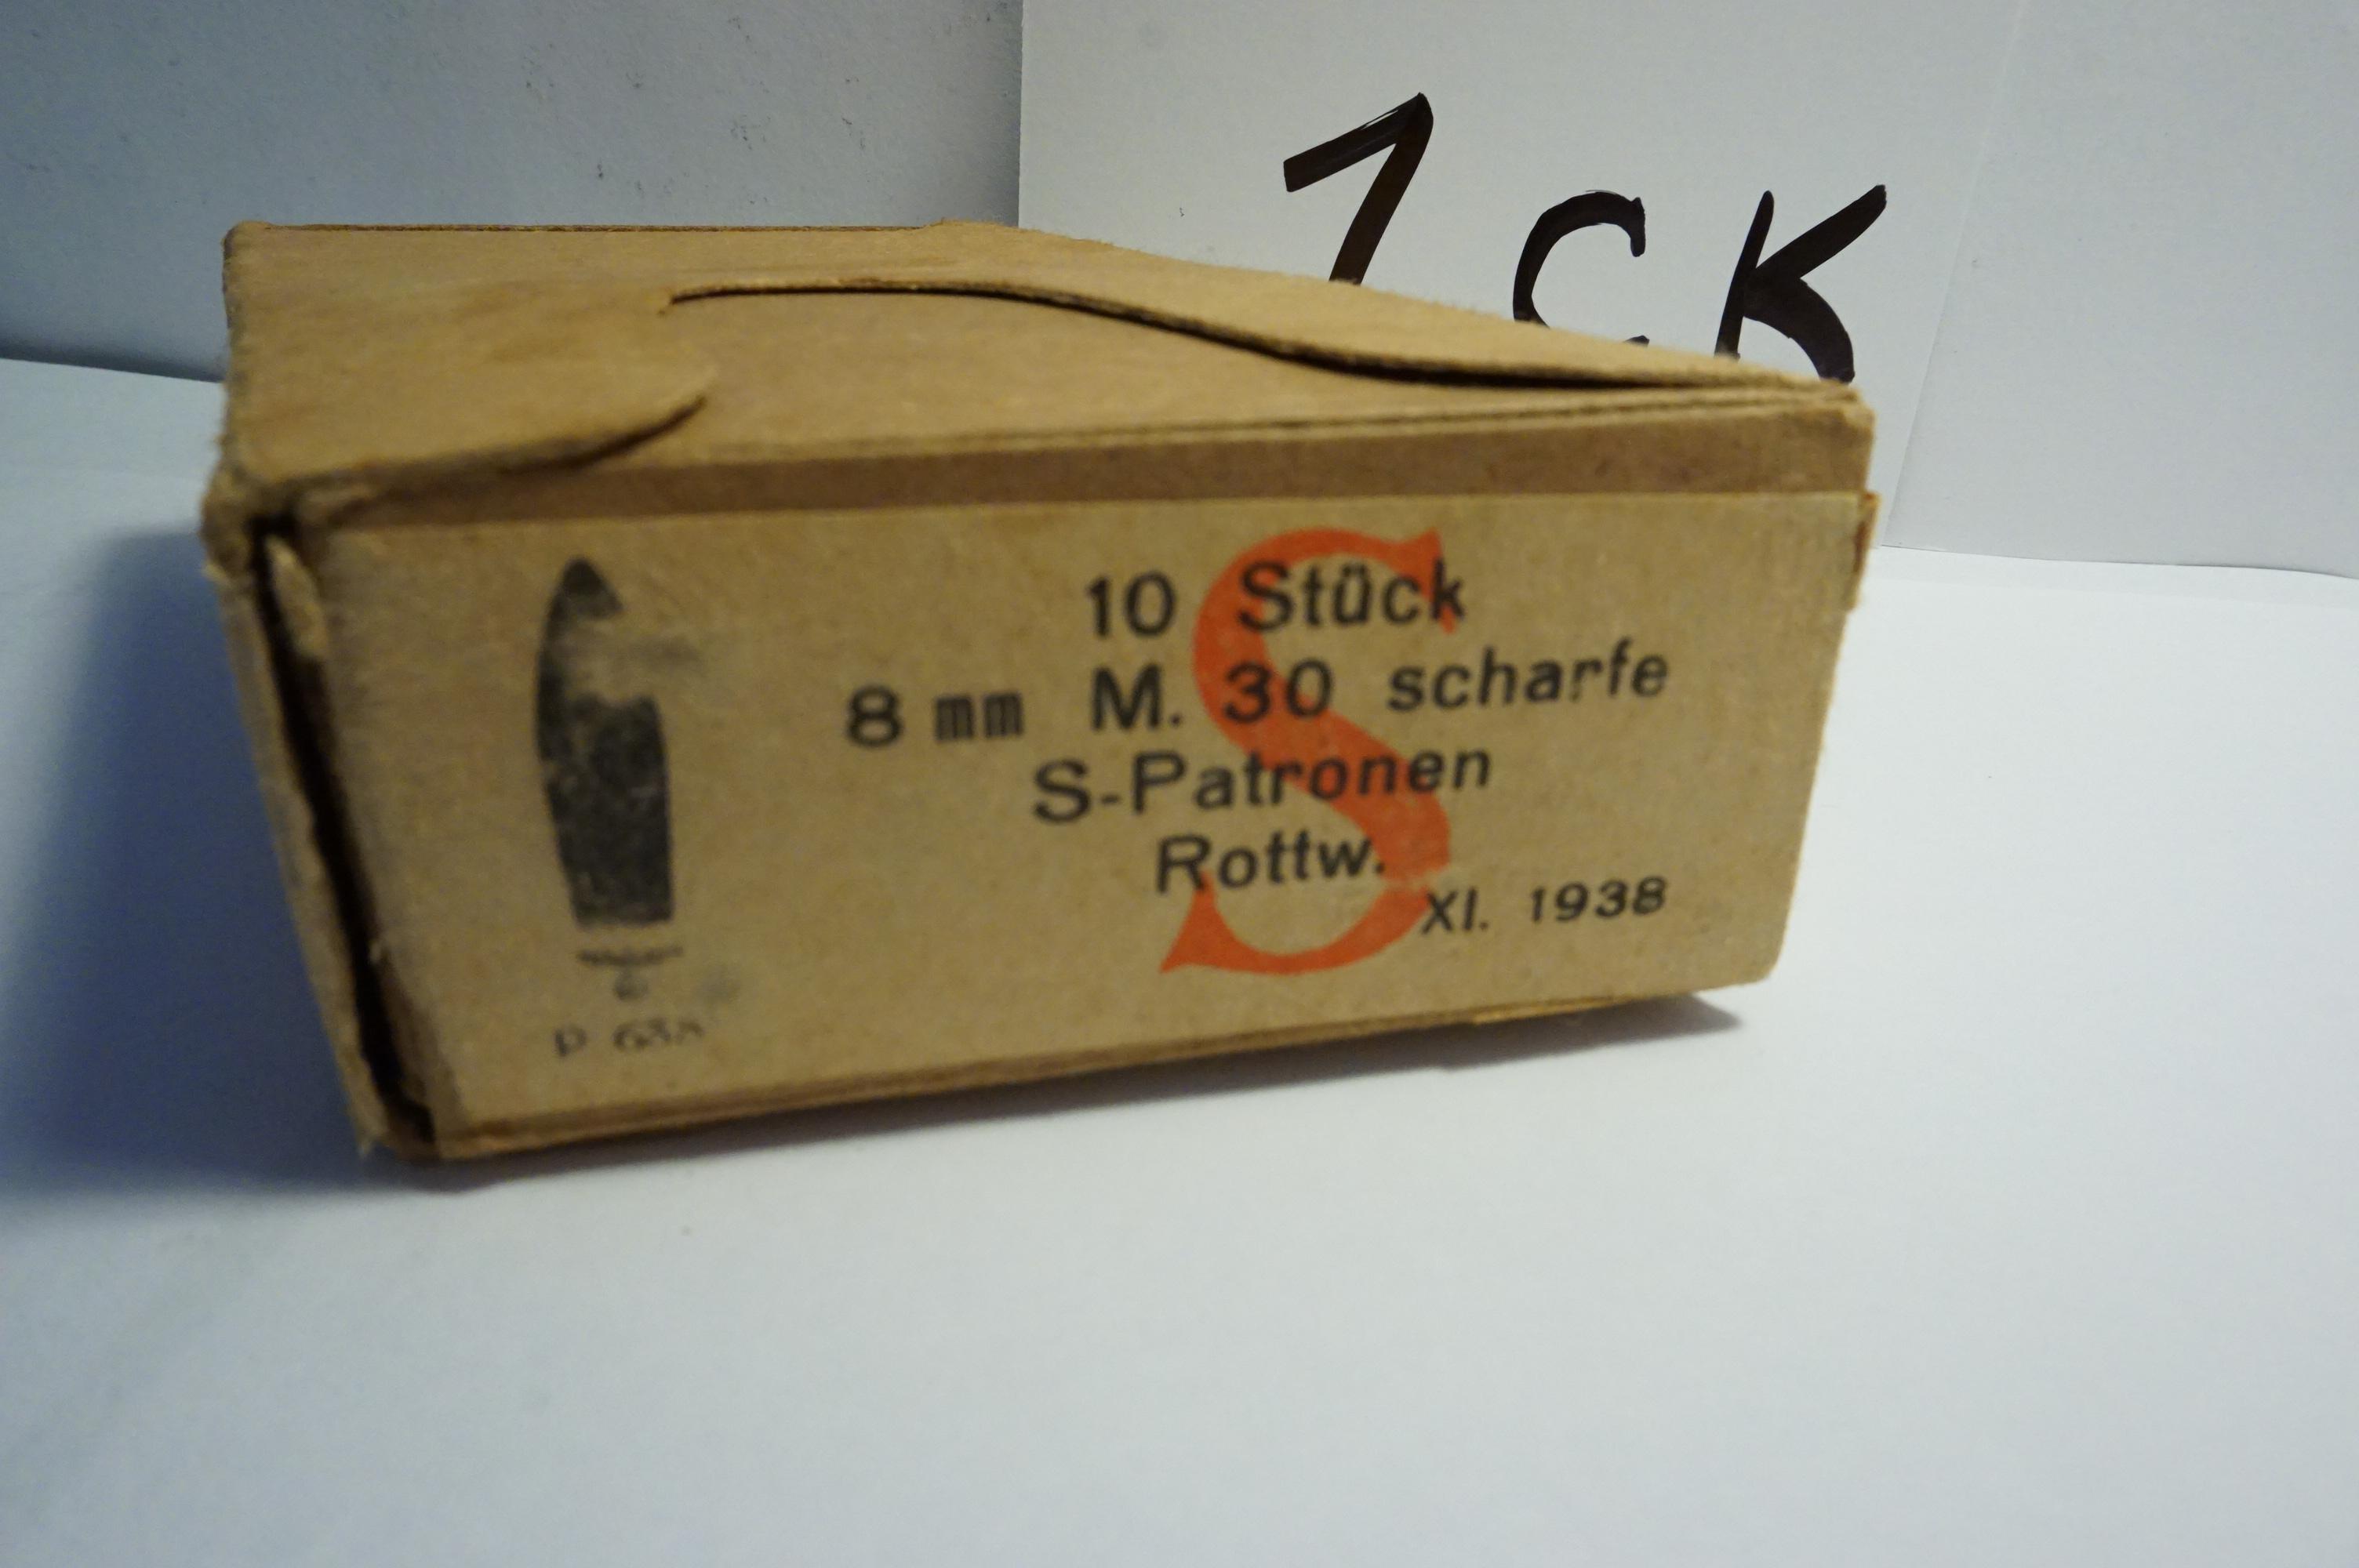 1938 NAZI Germany BOX of 8mm M. 30 Scharfe S-Patronen Rottw. 10 Stuck Cartridges in paper box!